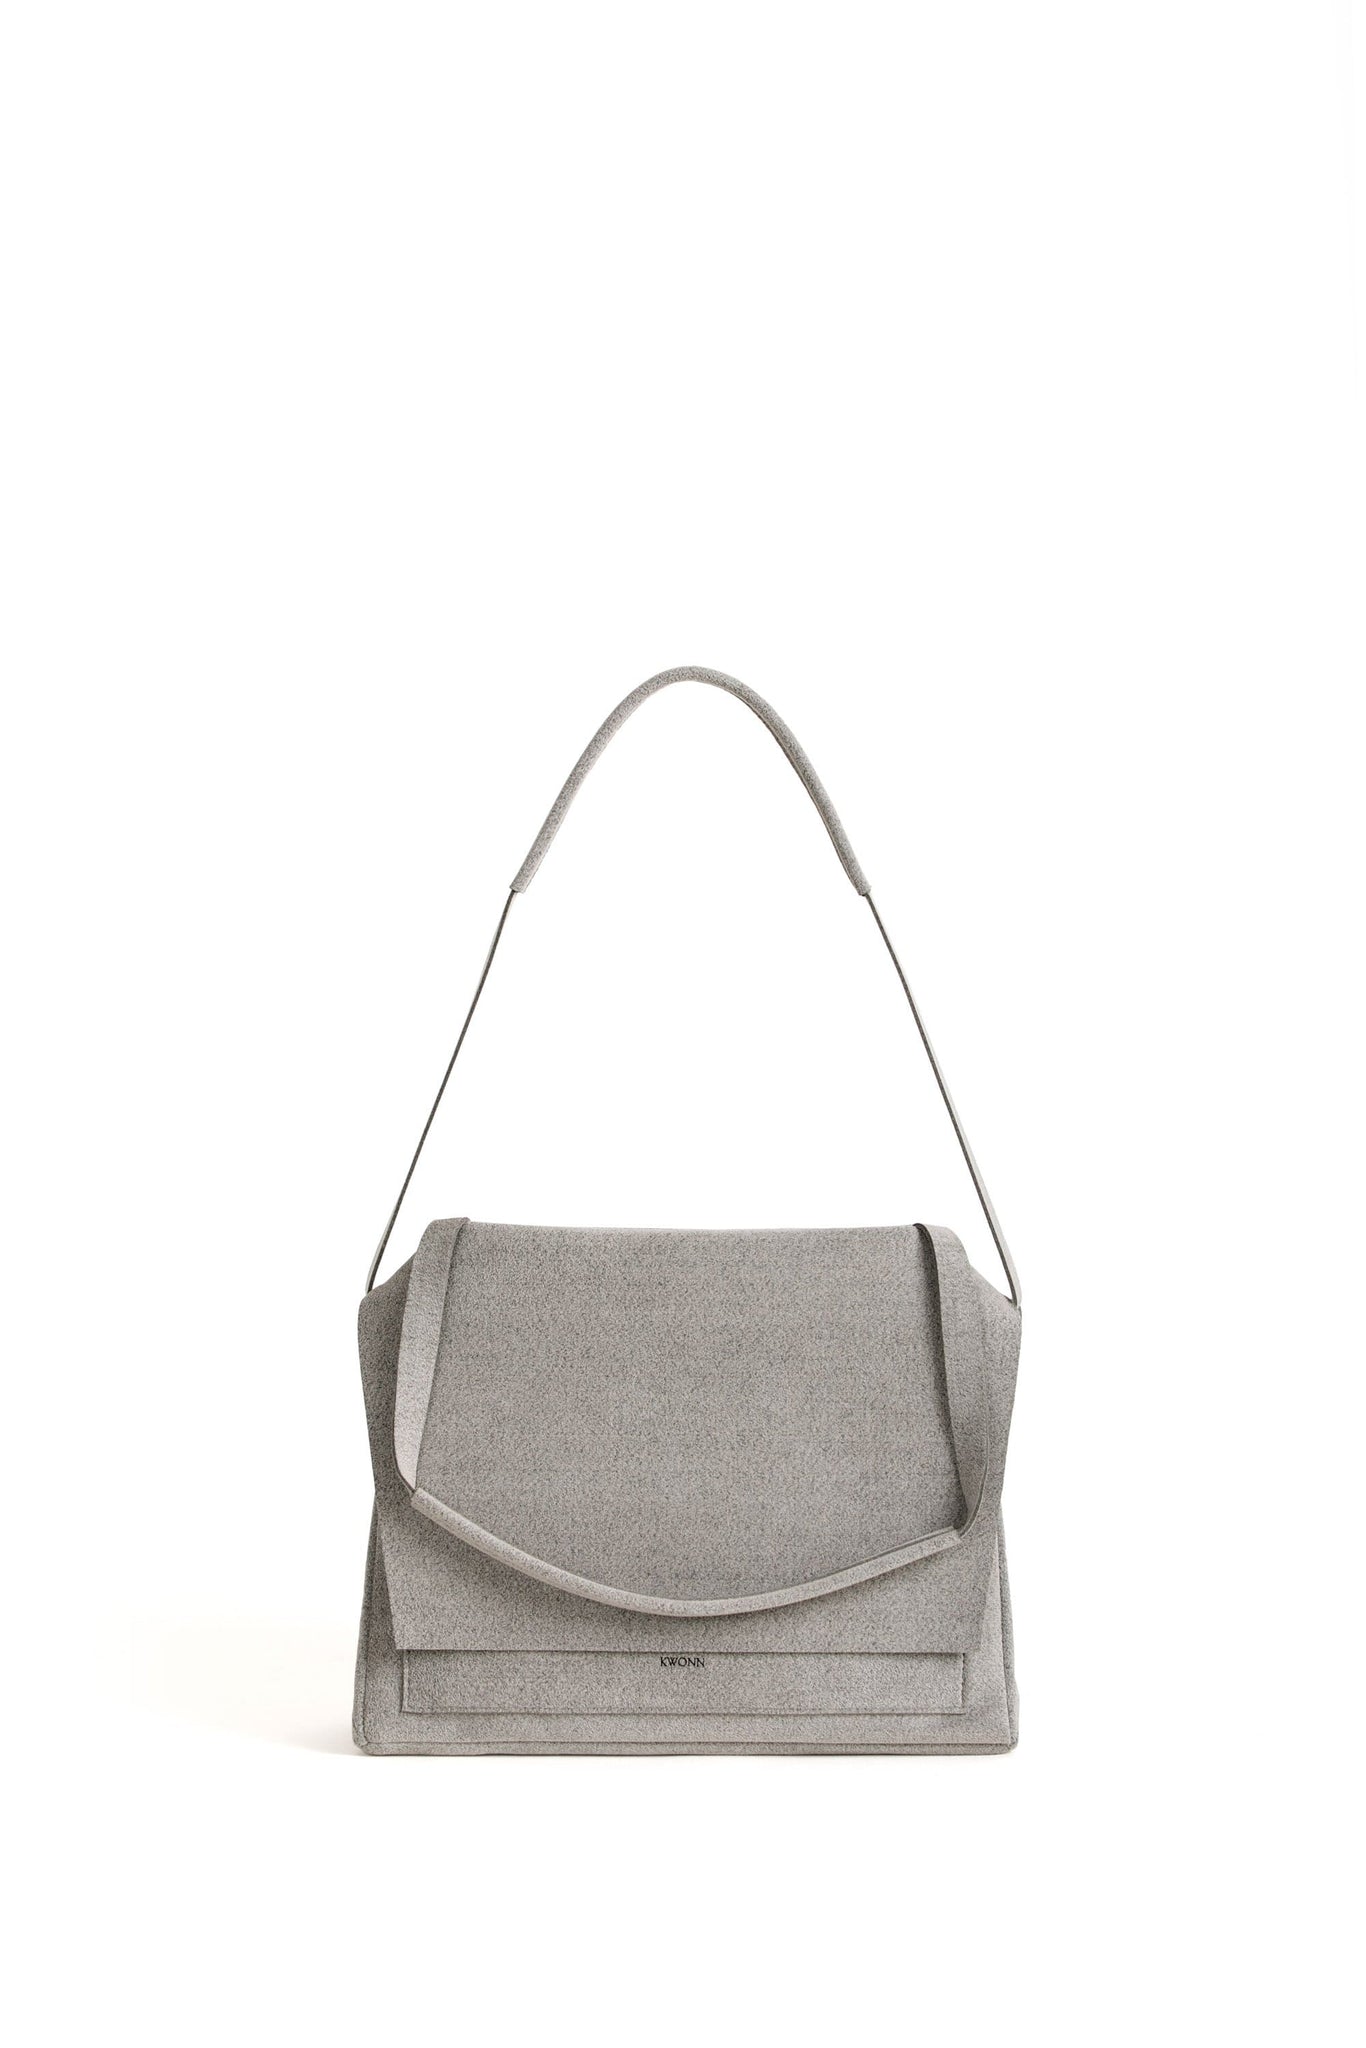 KWONN BAG Grey Crossbody vegan bags luxury bags handbags